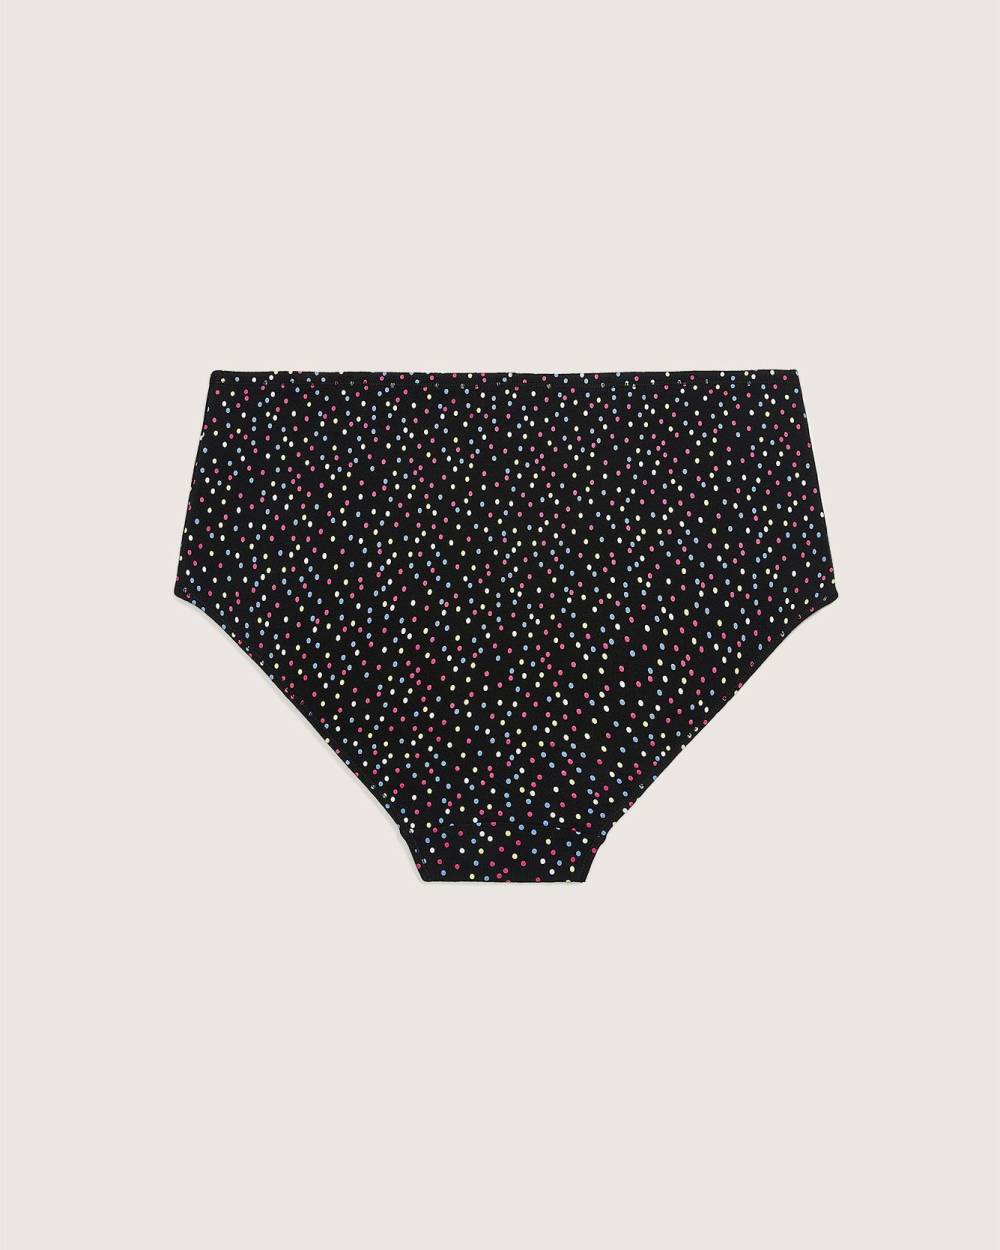 Black Dotted Cotton Full Brief - ti VOGLIO | Penningtons